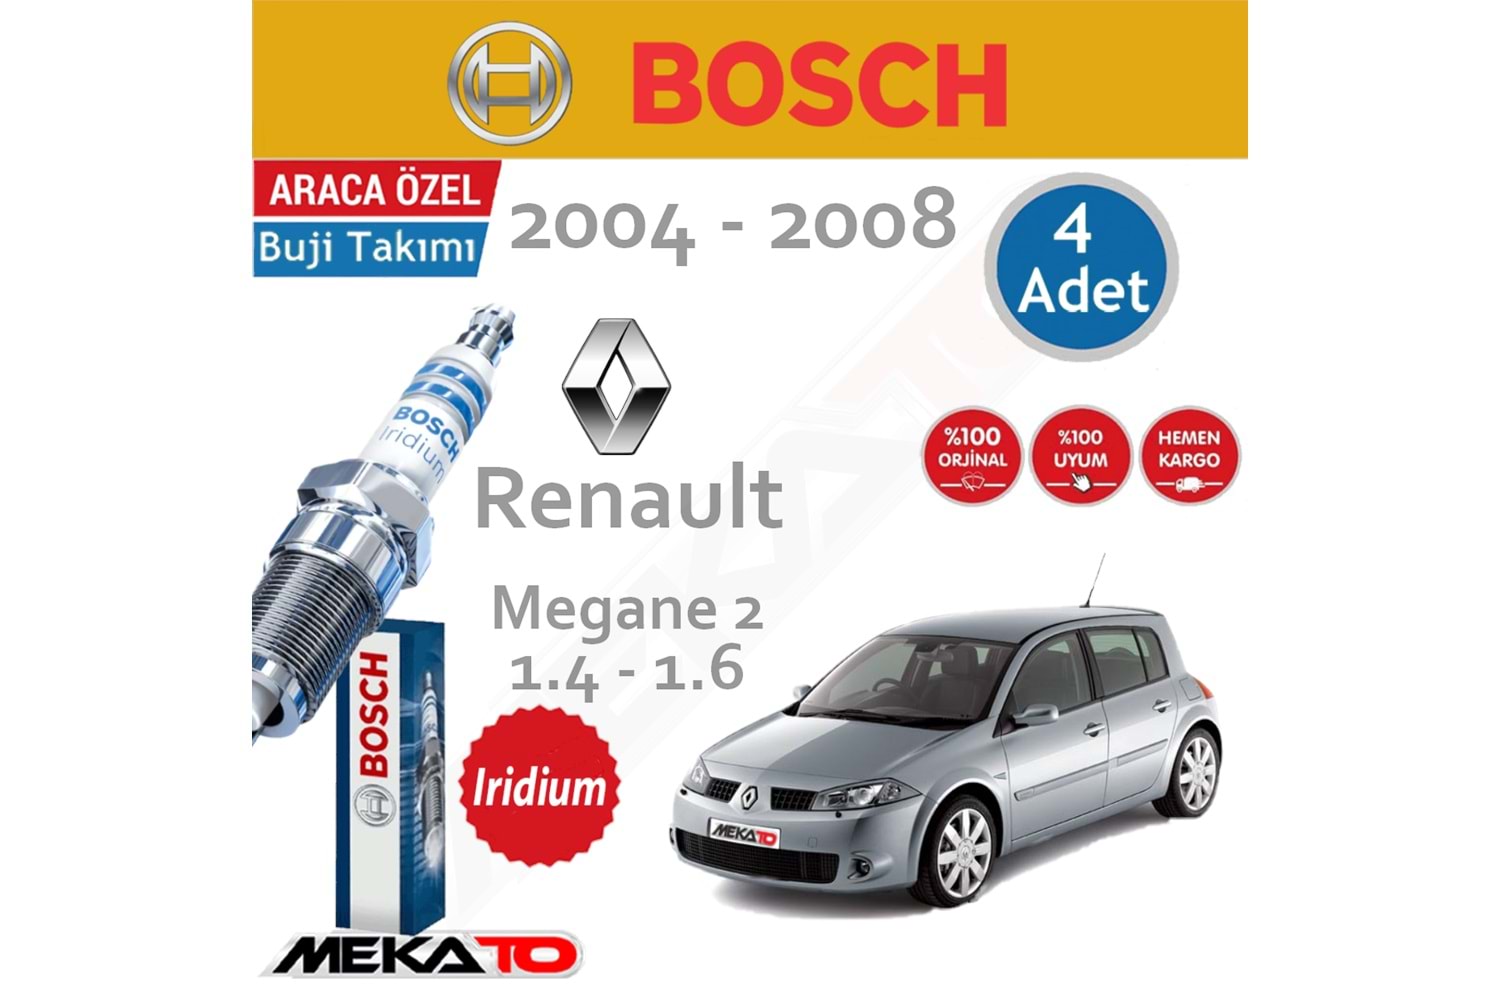 Bosch Renault Megane 2 Lpg (1.4-1.6) İridyum (2004-2008) Buji Takımı 4 Ad.